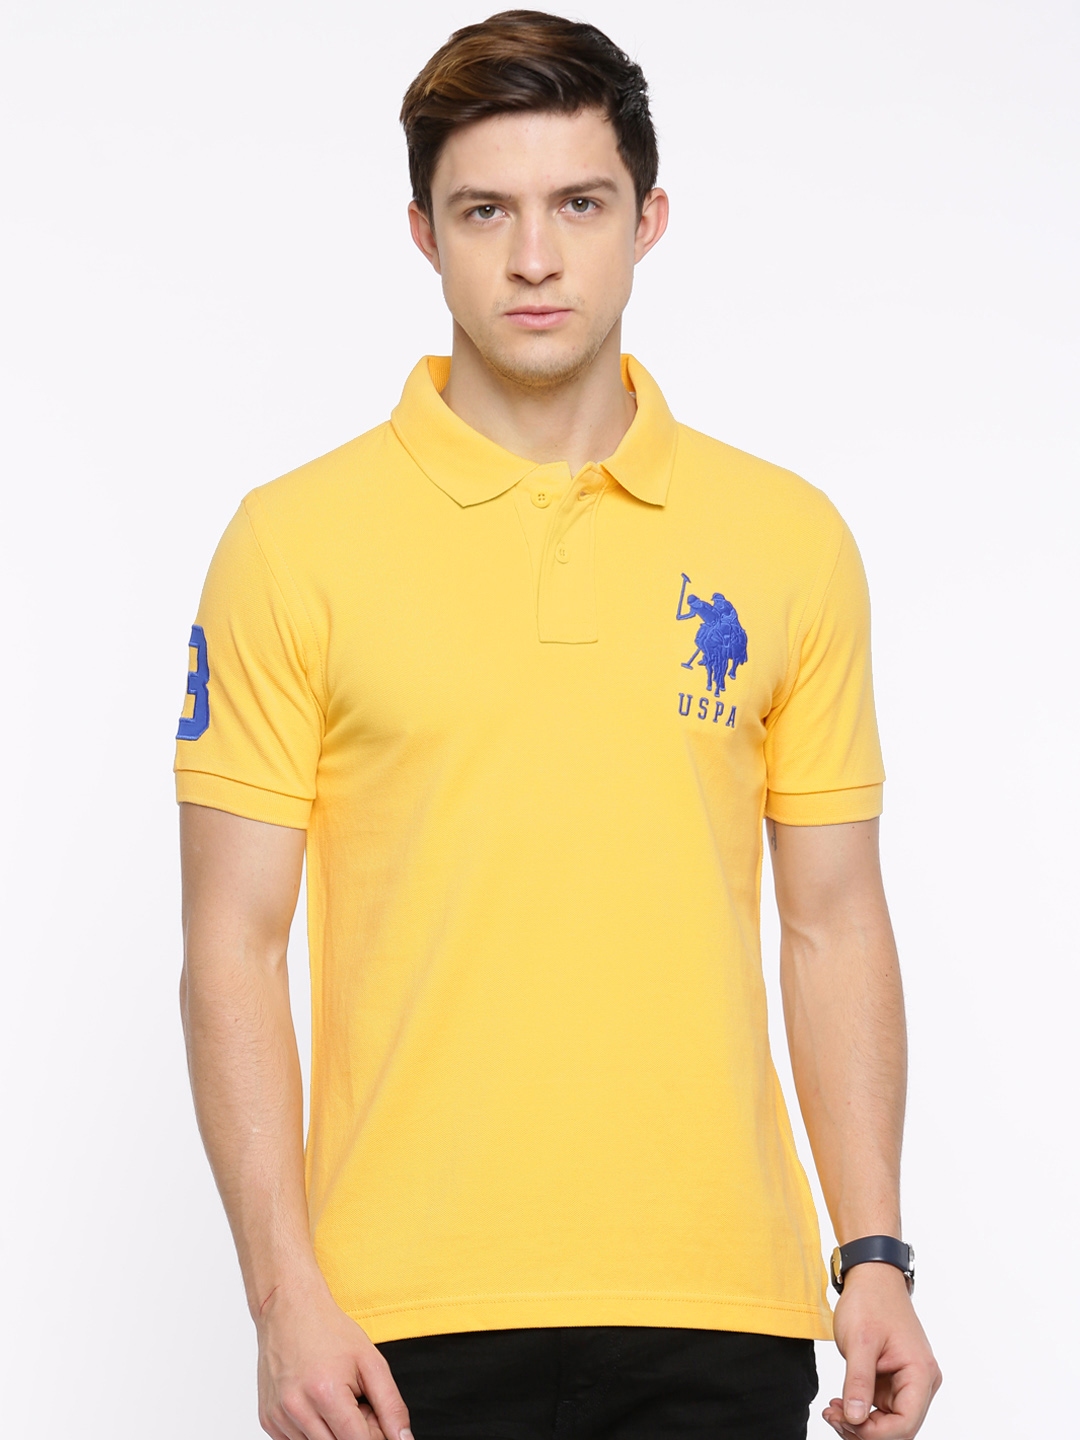 polo t shirt yellow